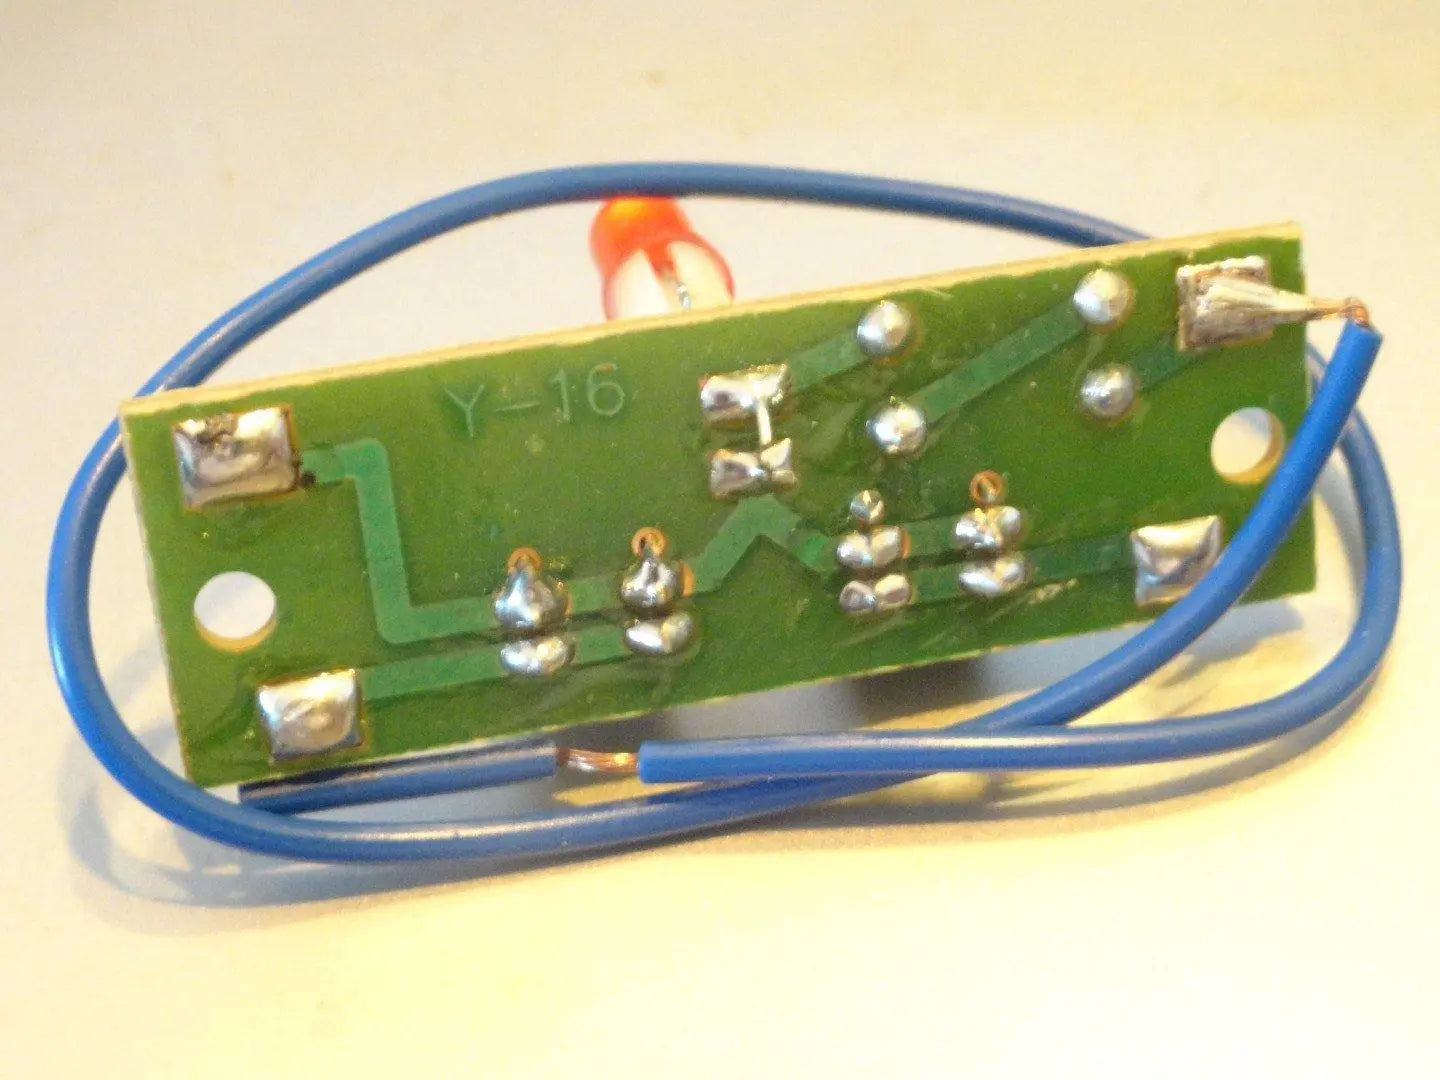 Scheda elettronica (pulsante oscil&ioniz) BIMAR